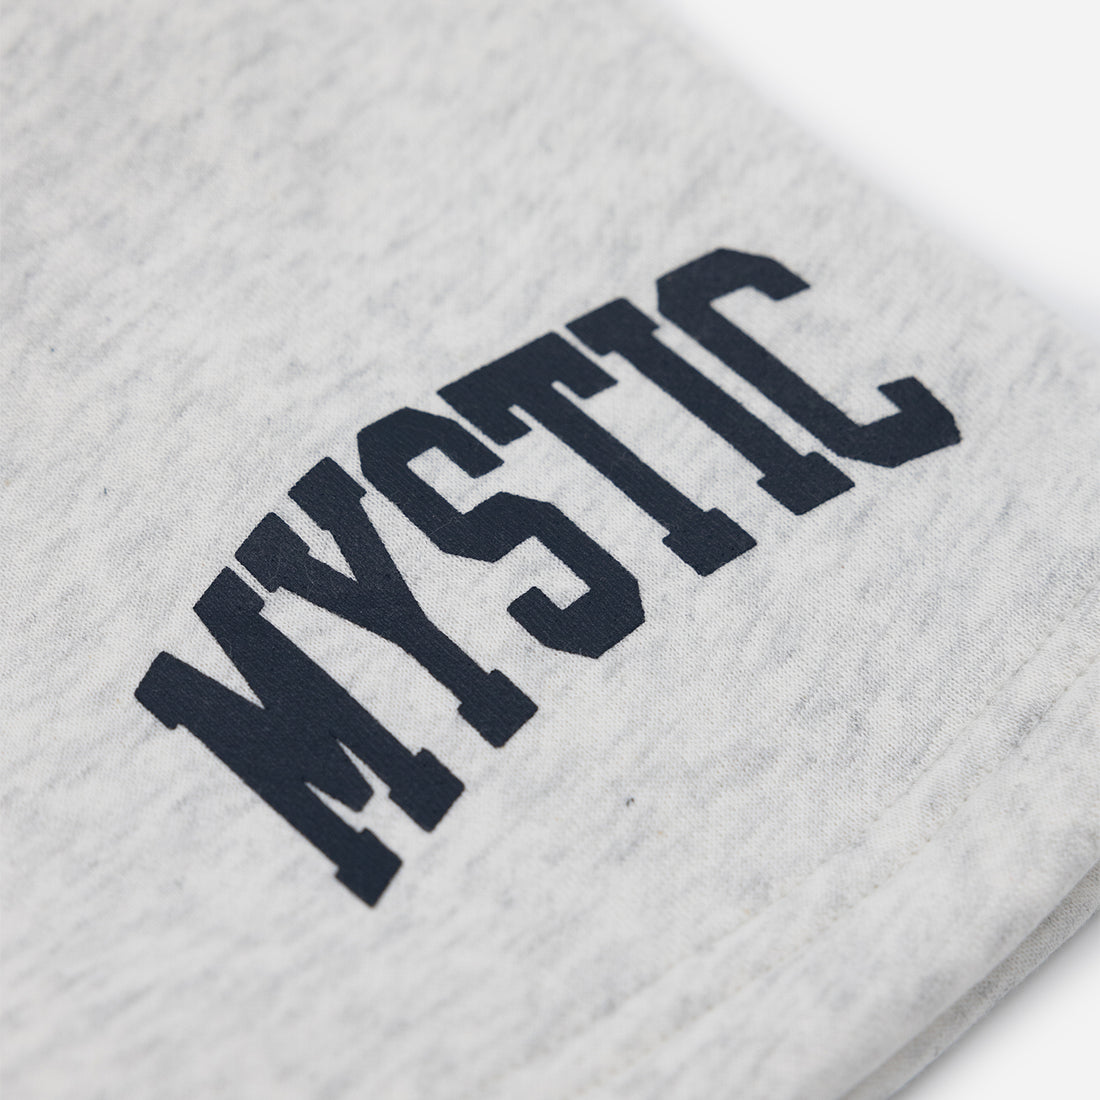 Mystic Women's Sweat Shorts